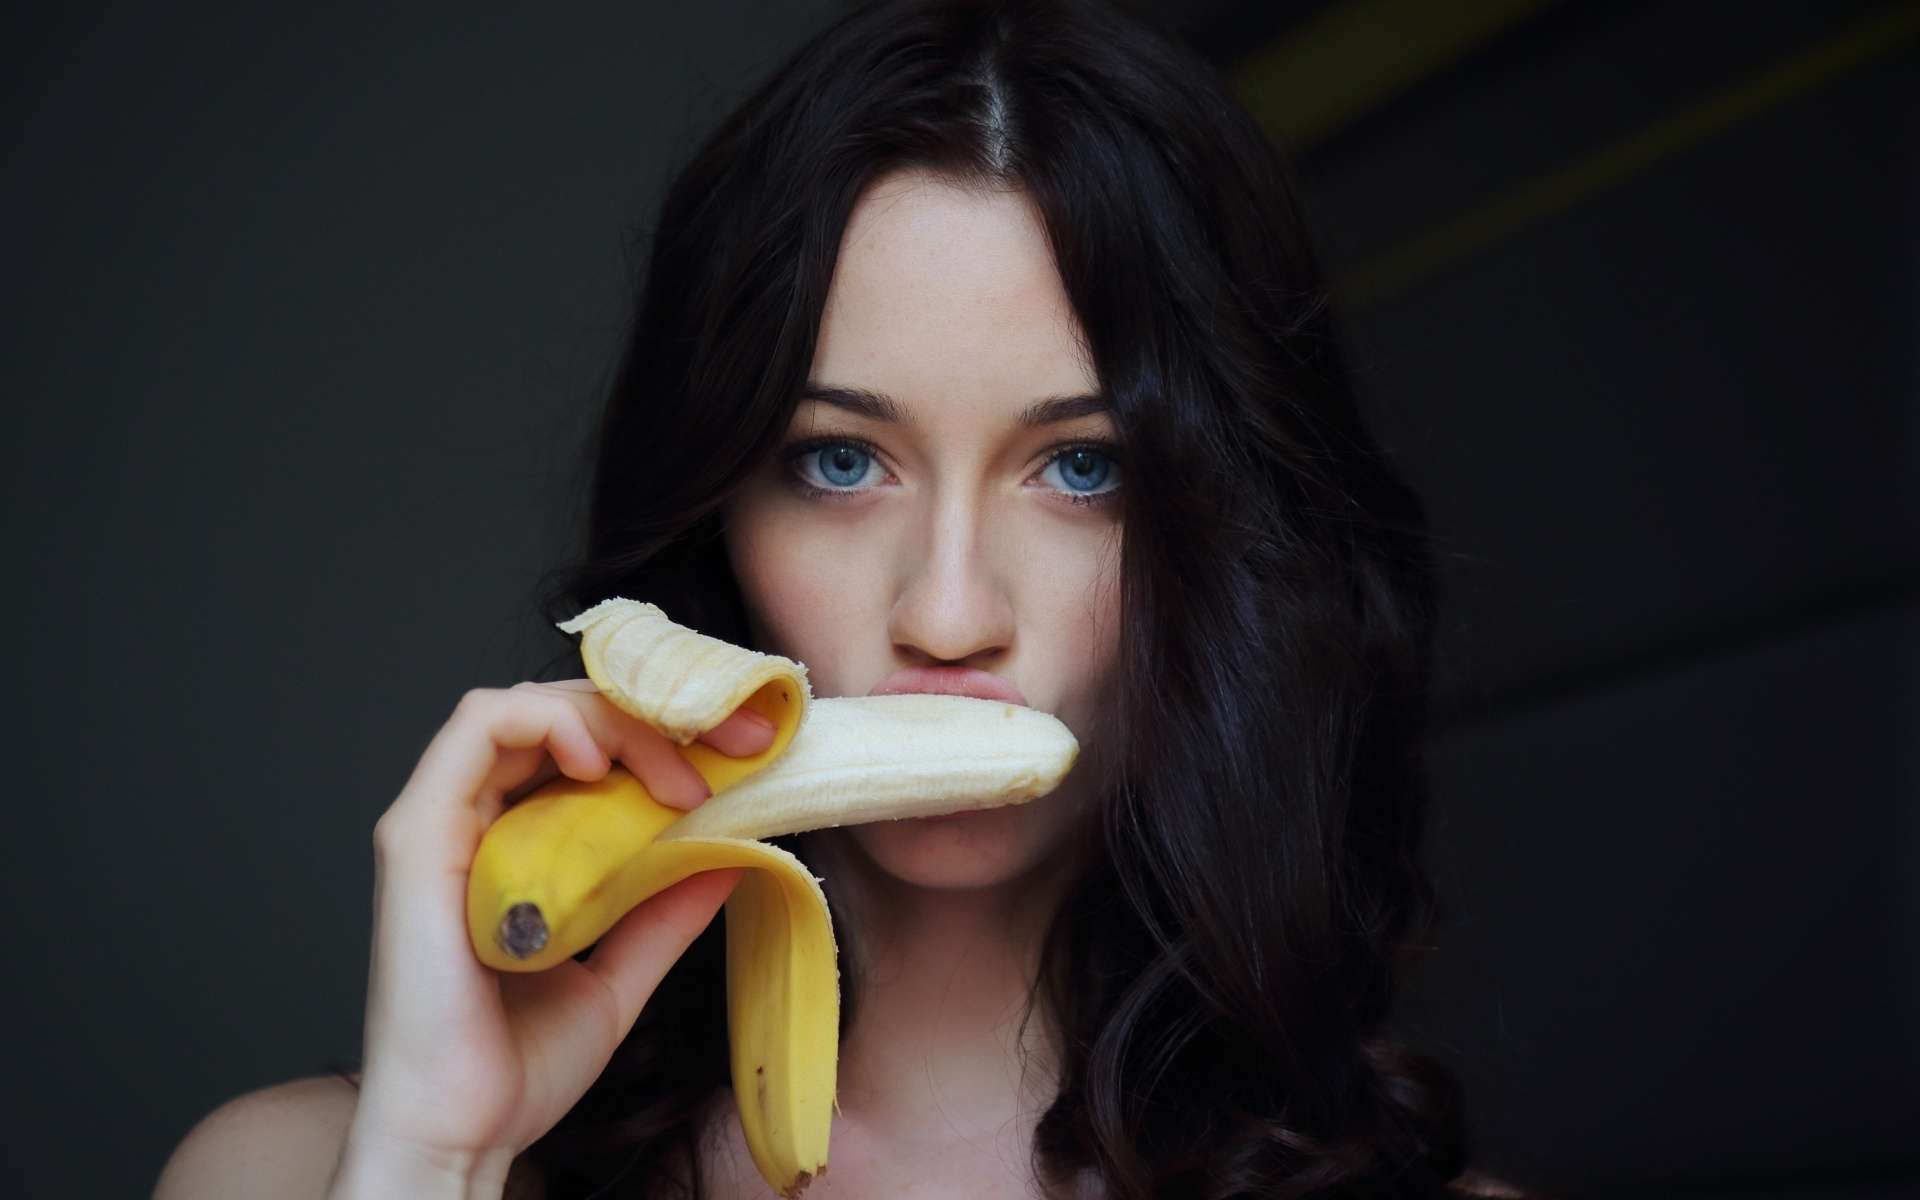 Bananas in bodybuilding